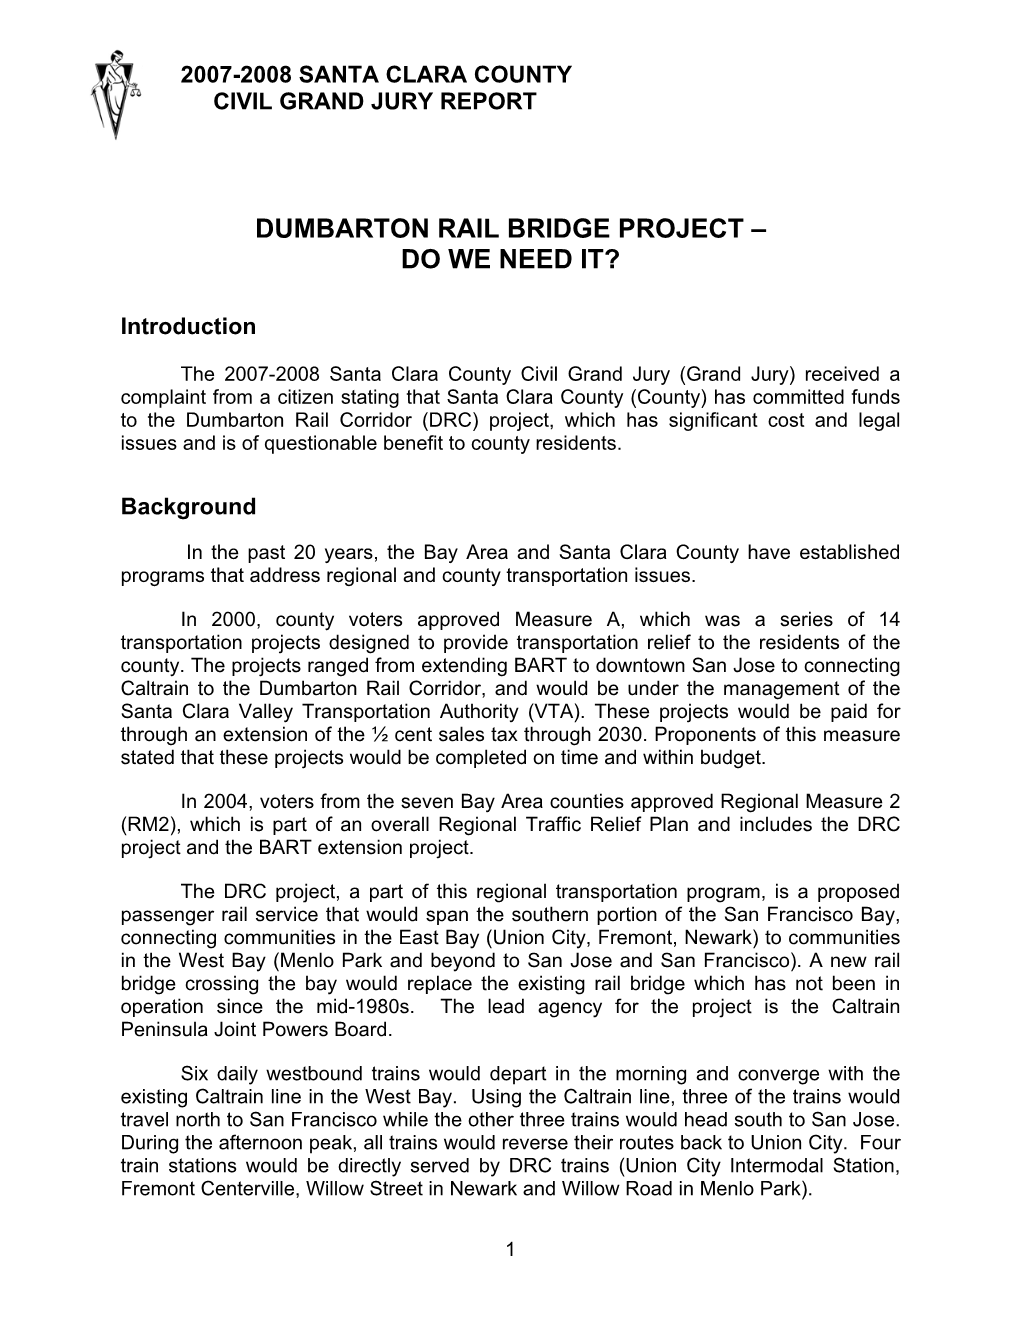 Dumbarton Rail Bridge Project – Do We Need It?